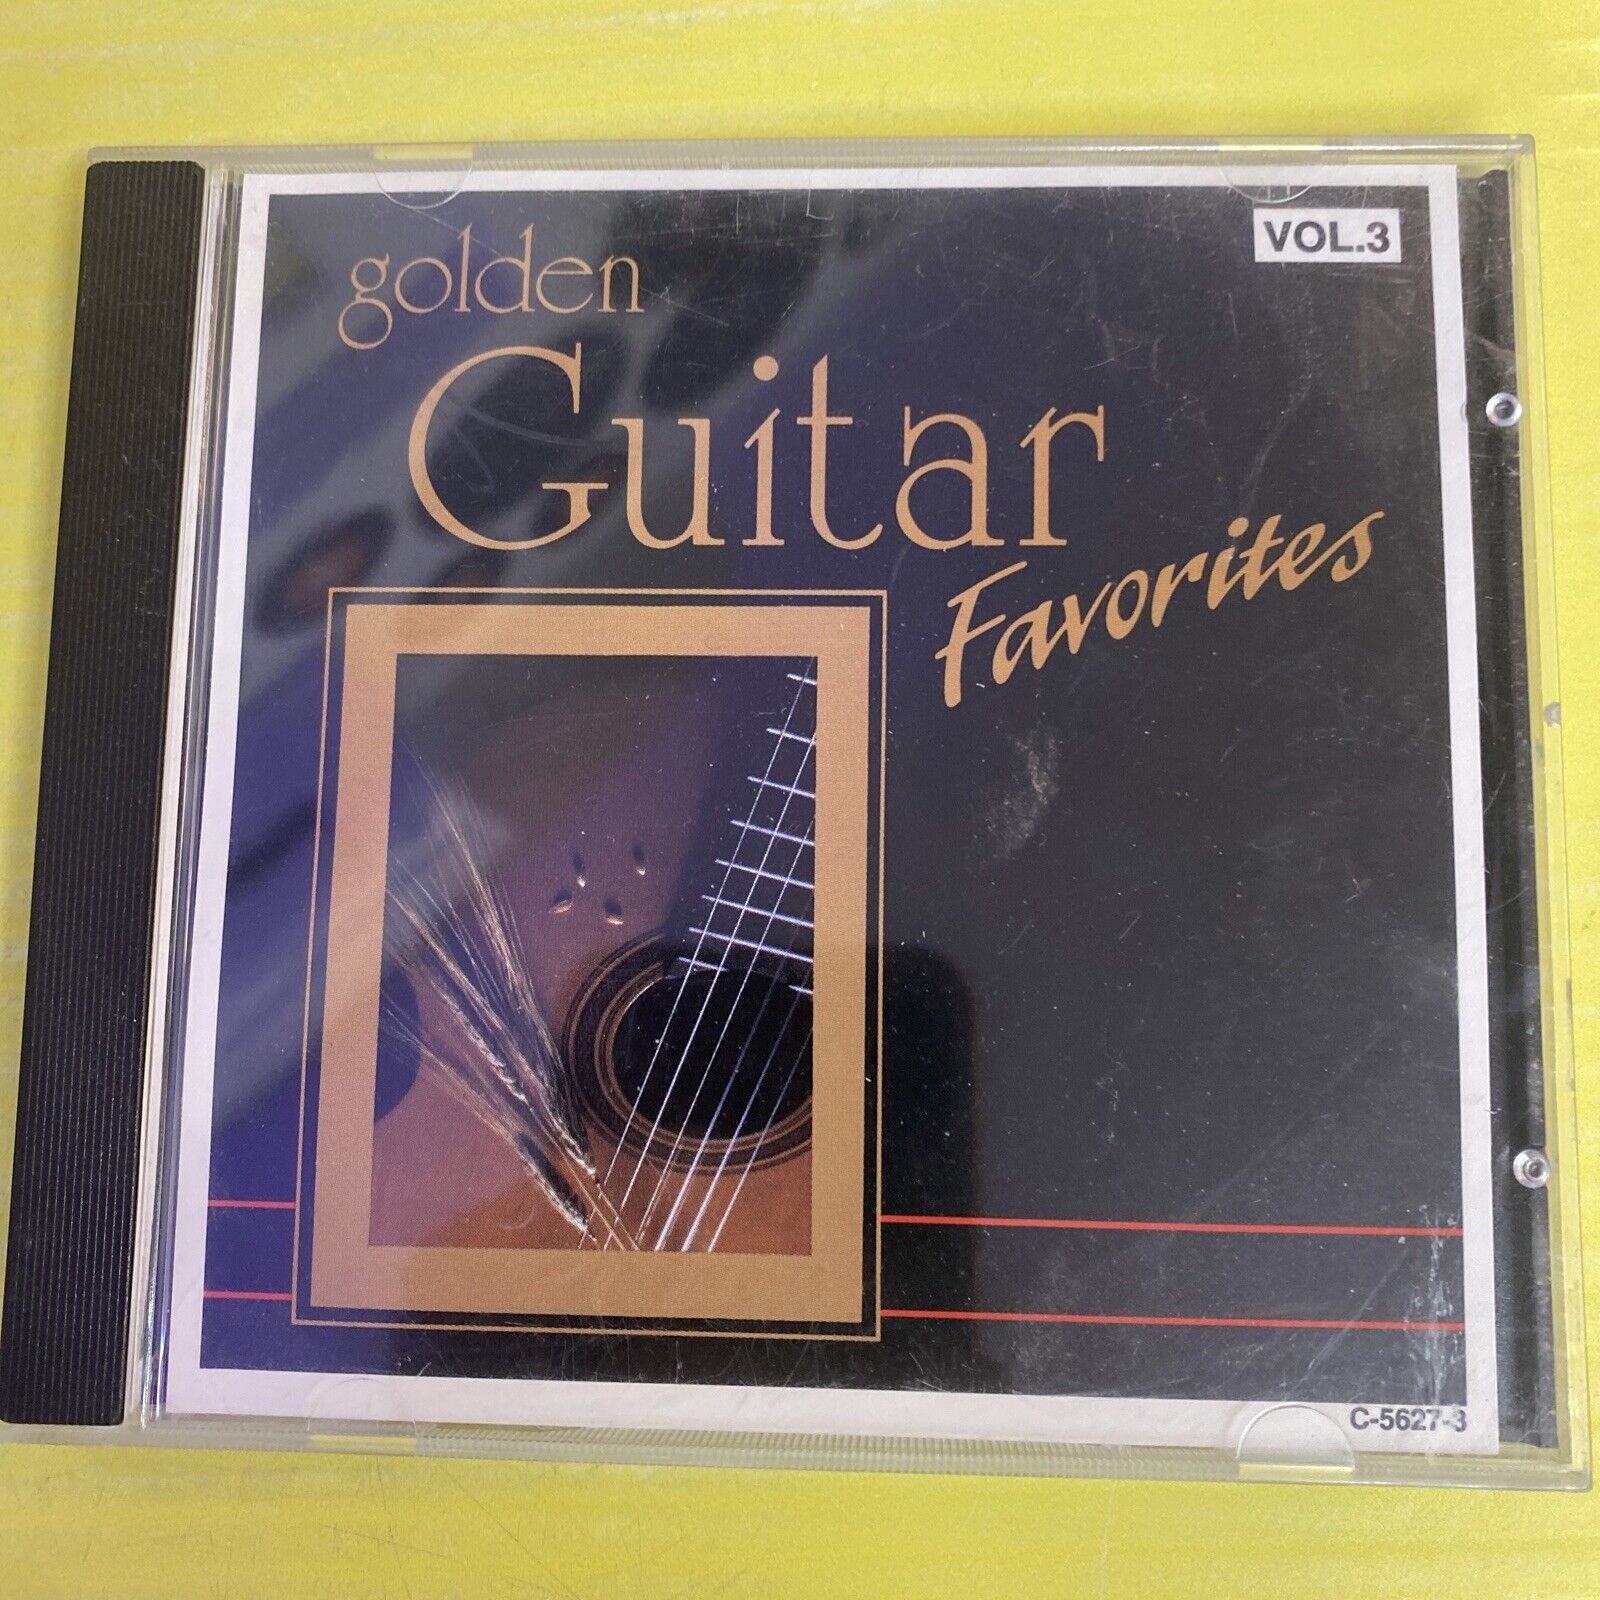 Favorites Golden Guitar Vol 3 - CD